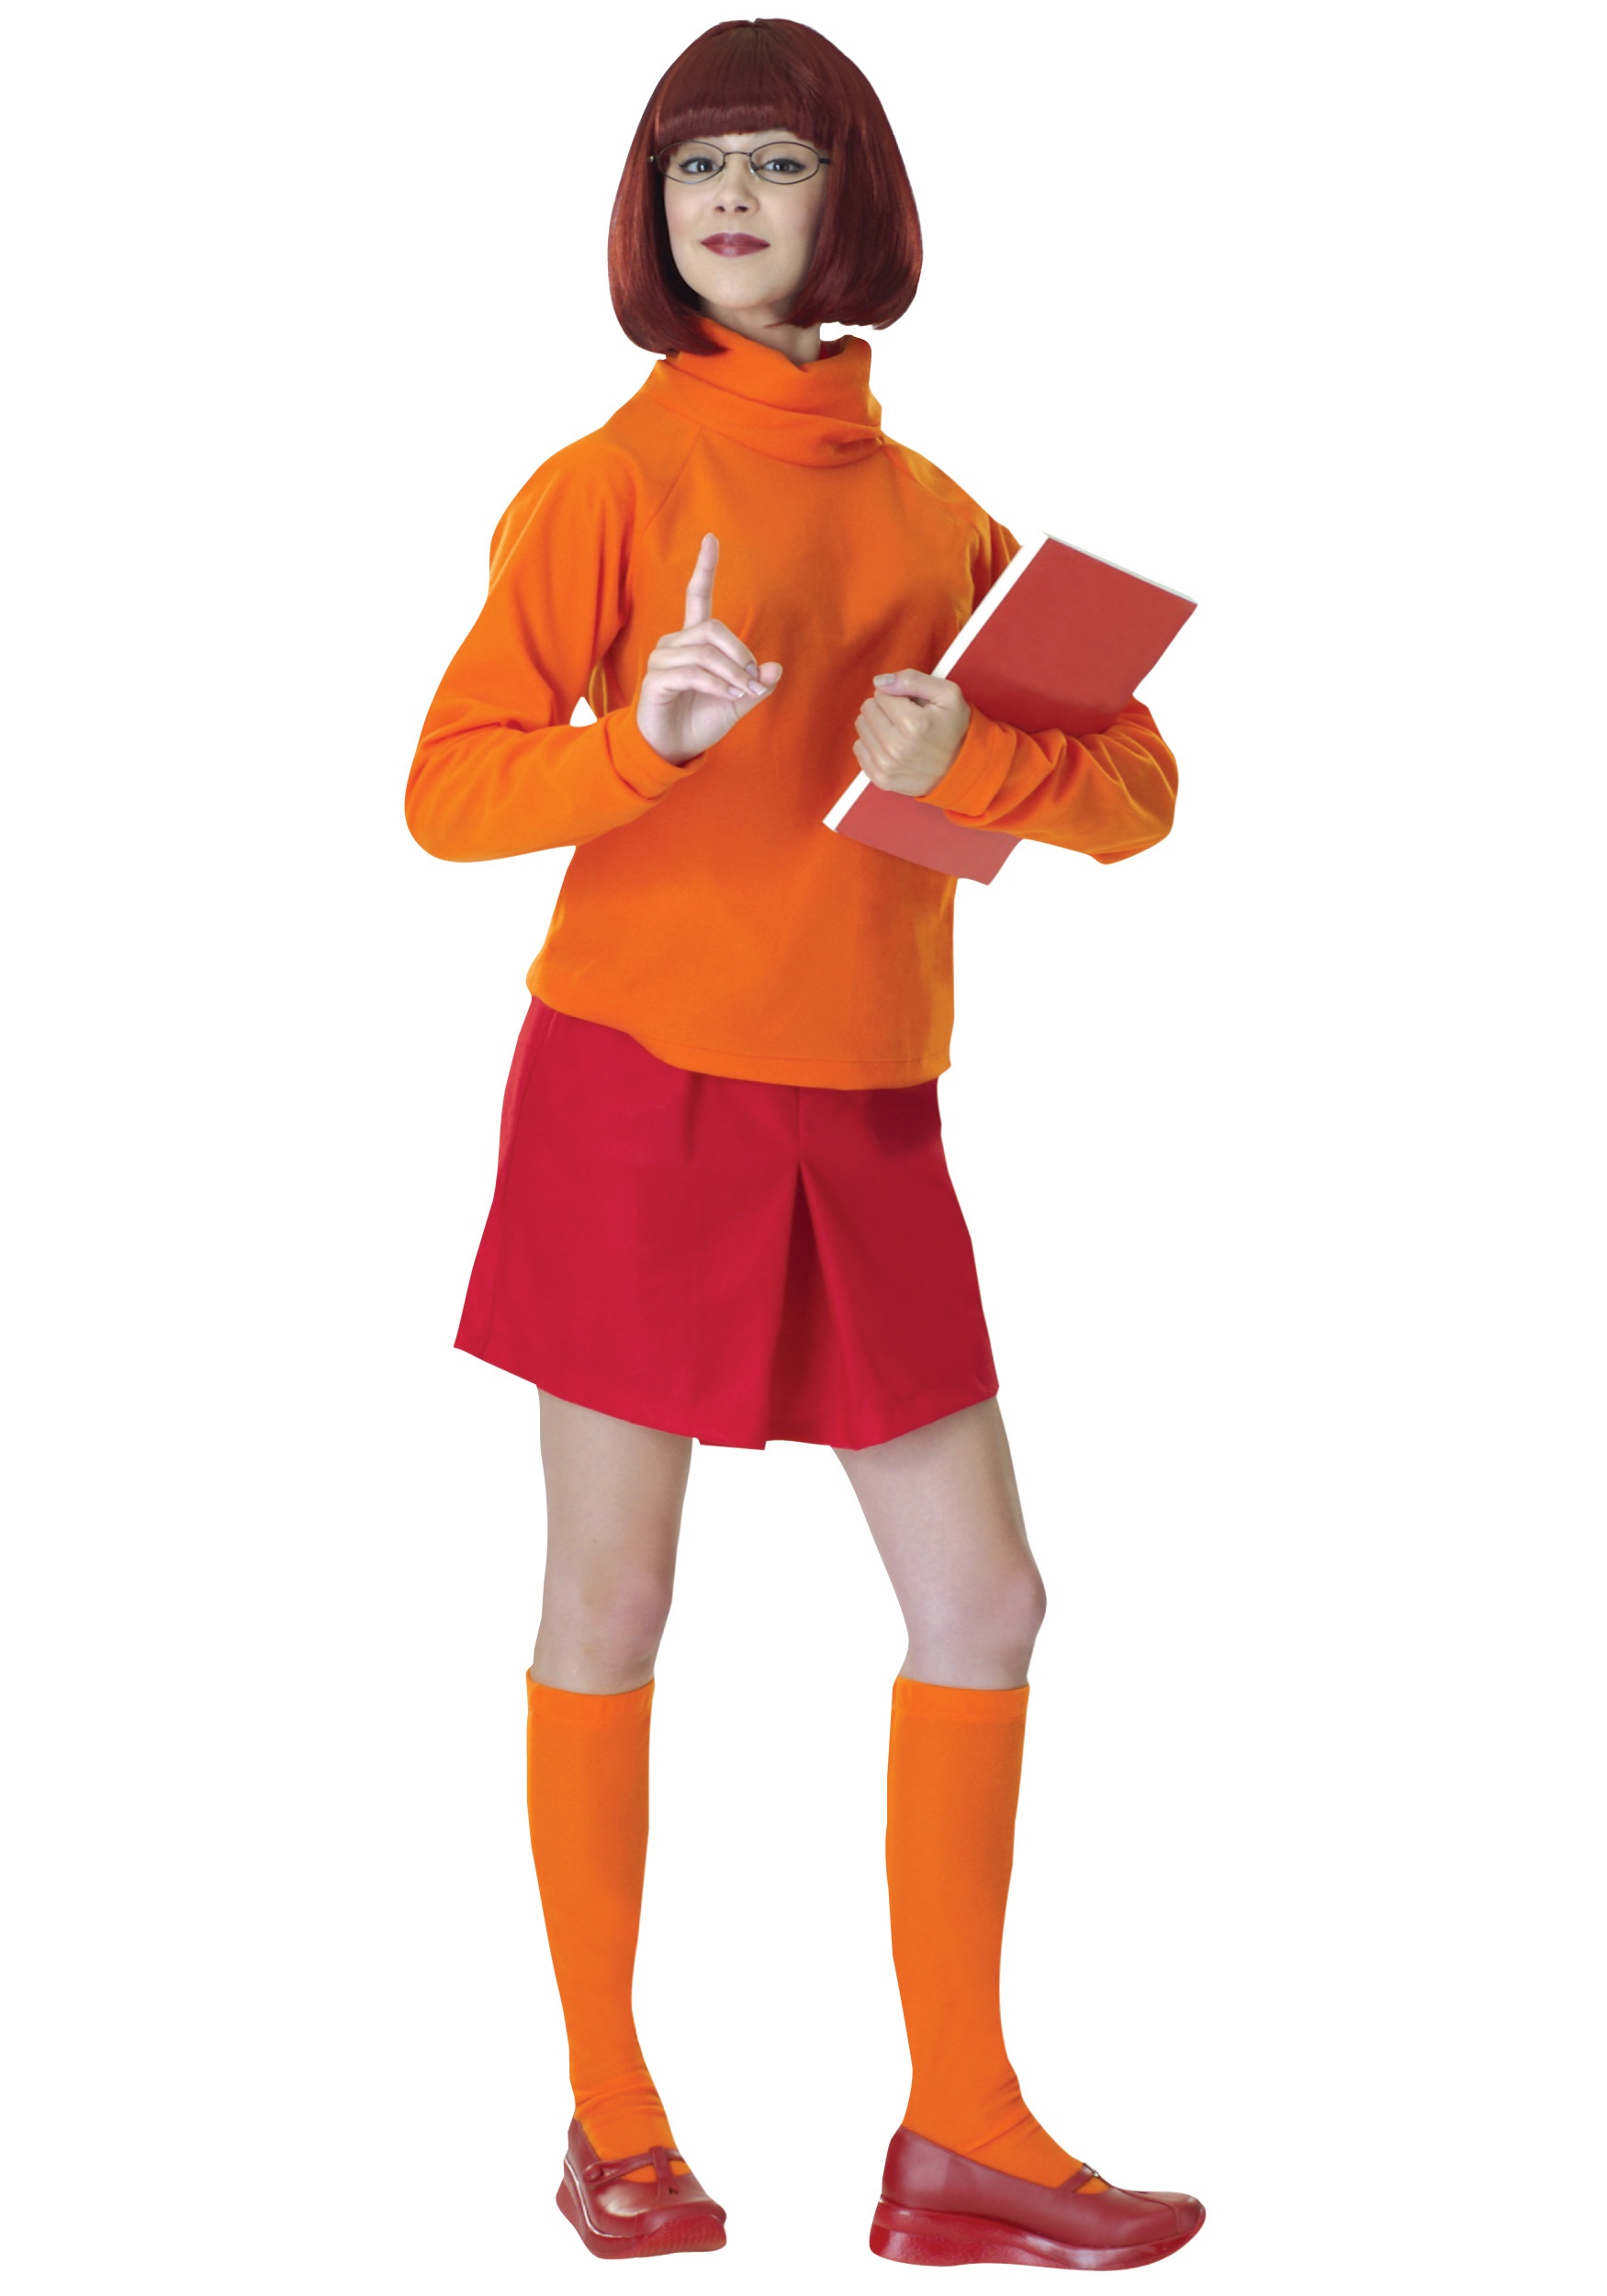 Photos - Fancy Dress Rubies Costume Co. Inc Adult Velma Costume W/ Wig - Adult Scooby Doo Costu 